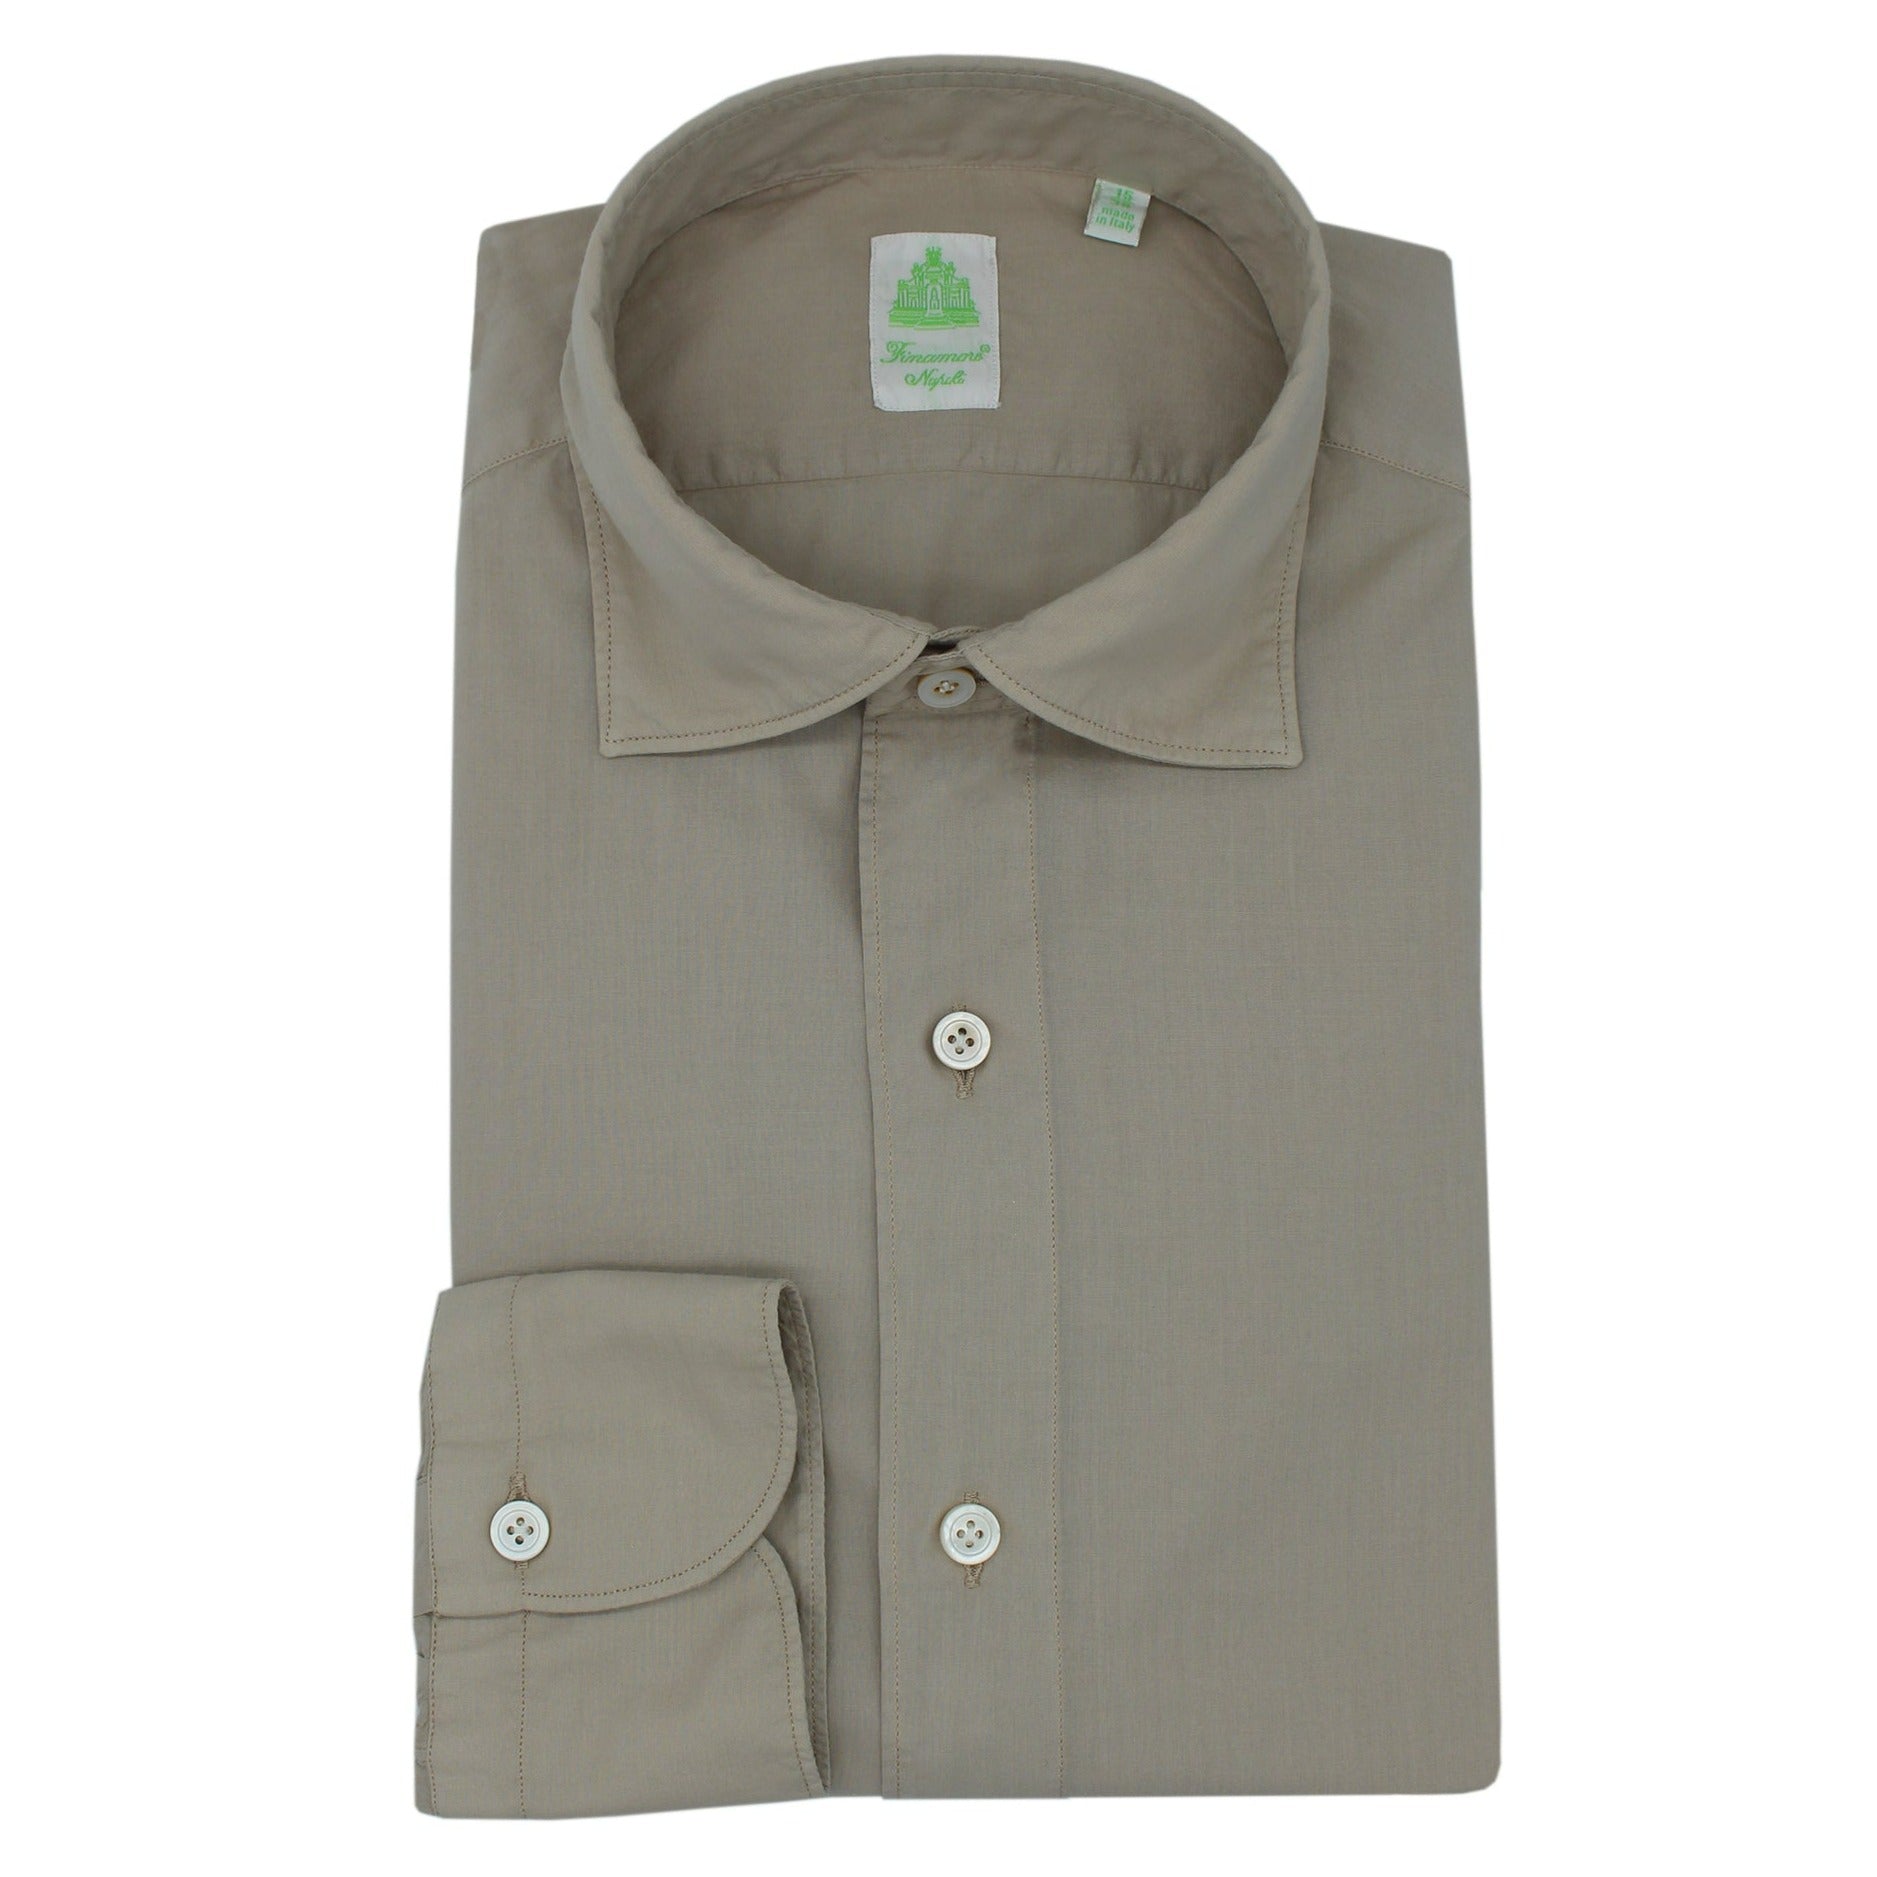 Tokyo slim fit cotton garment dyed brown shirt